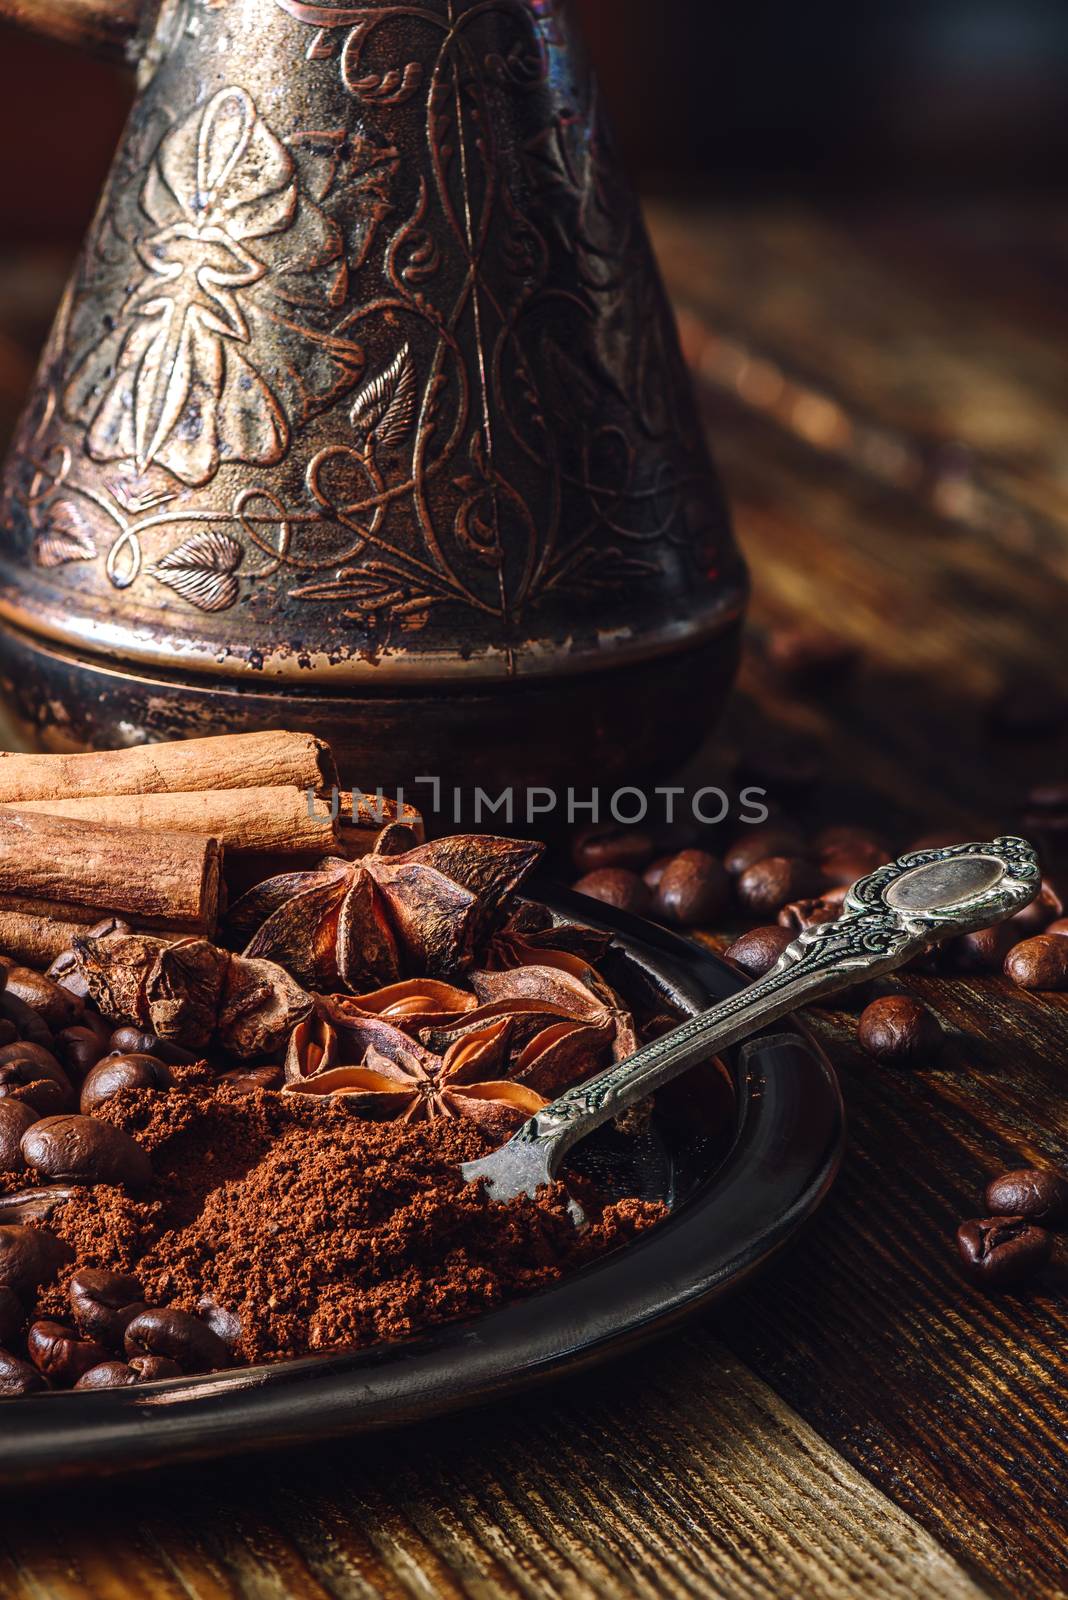 Spoonful of Ground Coffee. by Seva_blsv